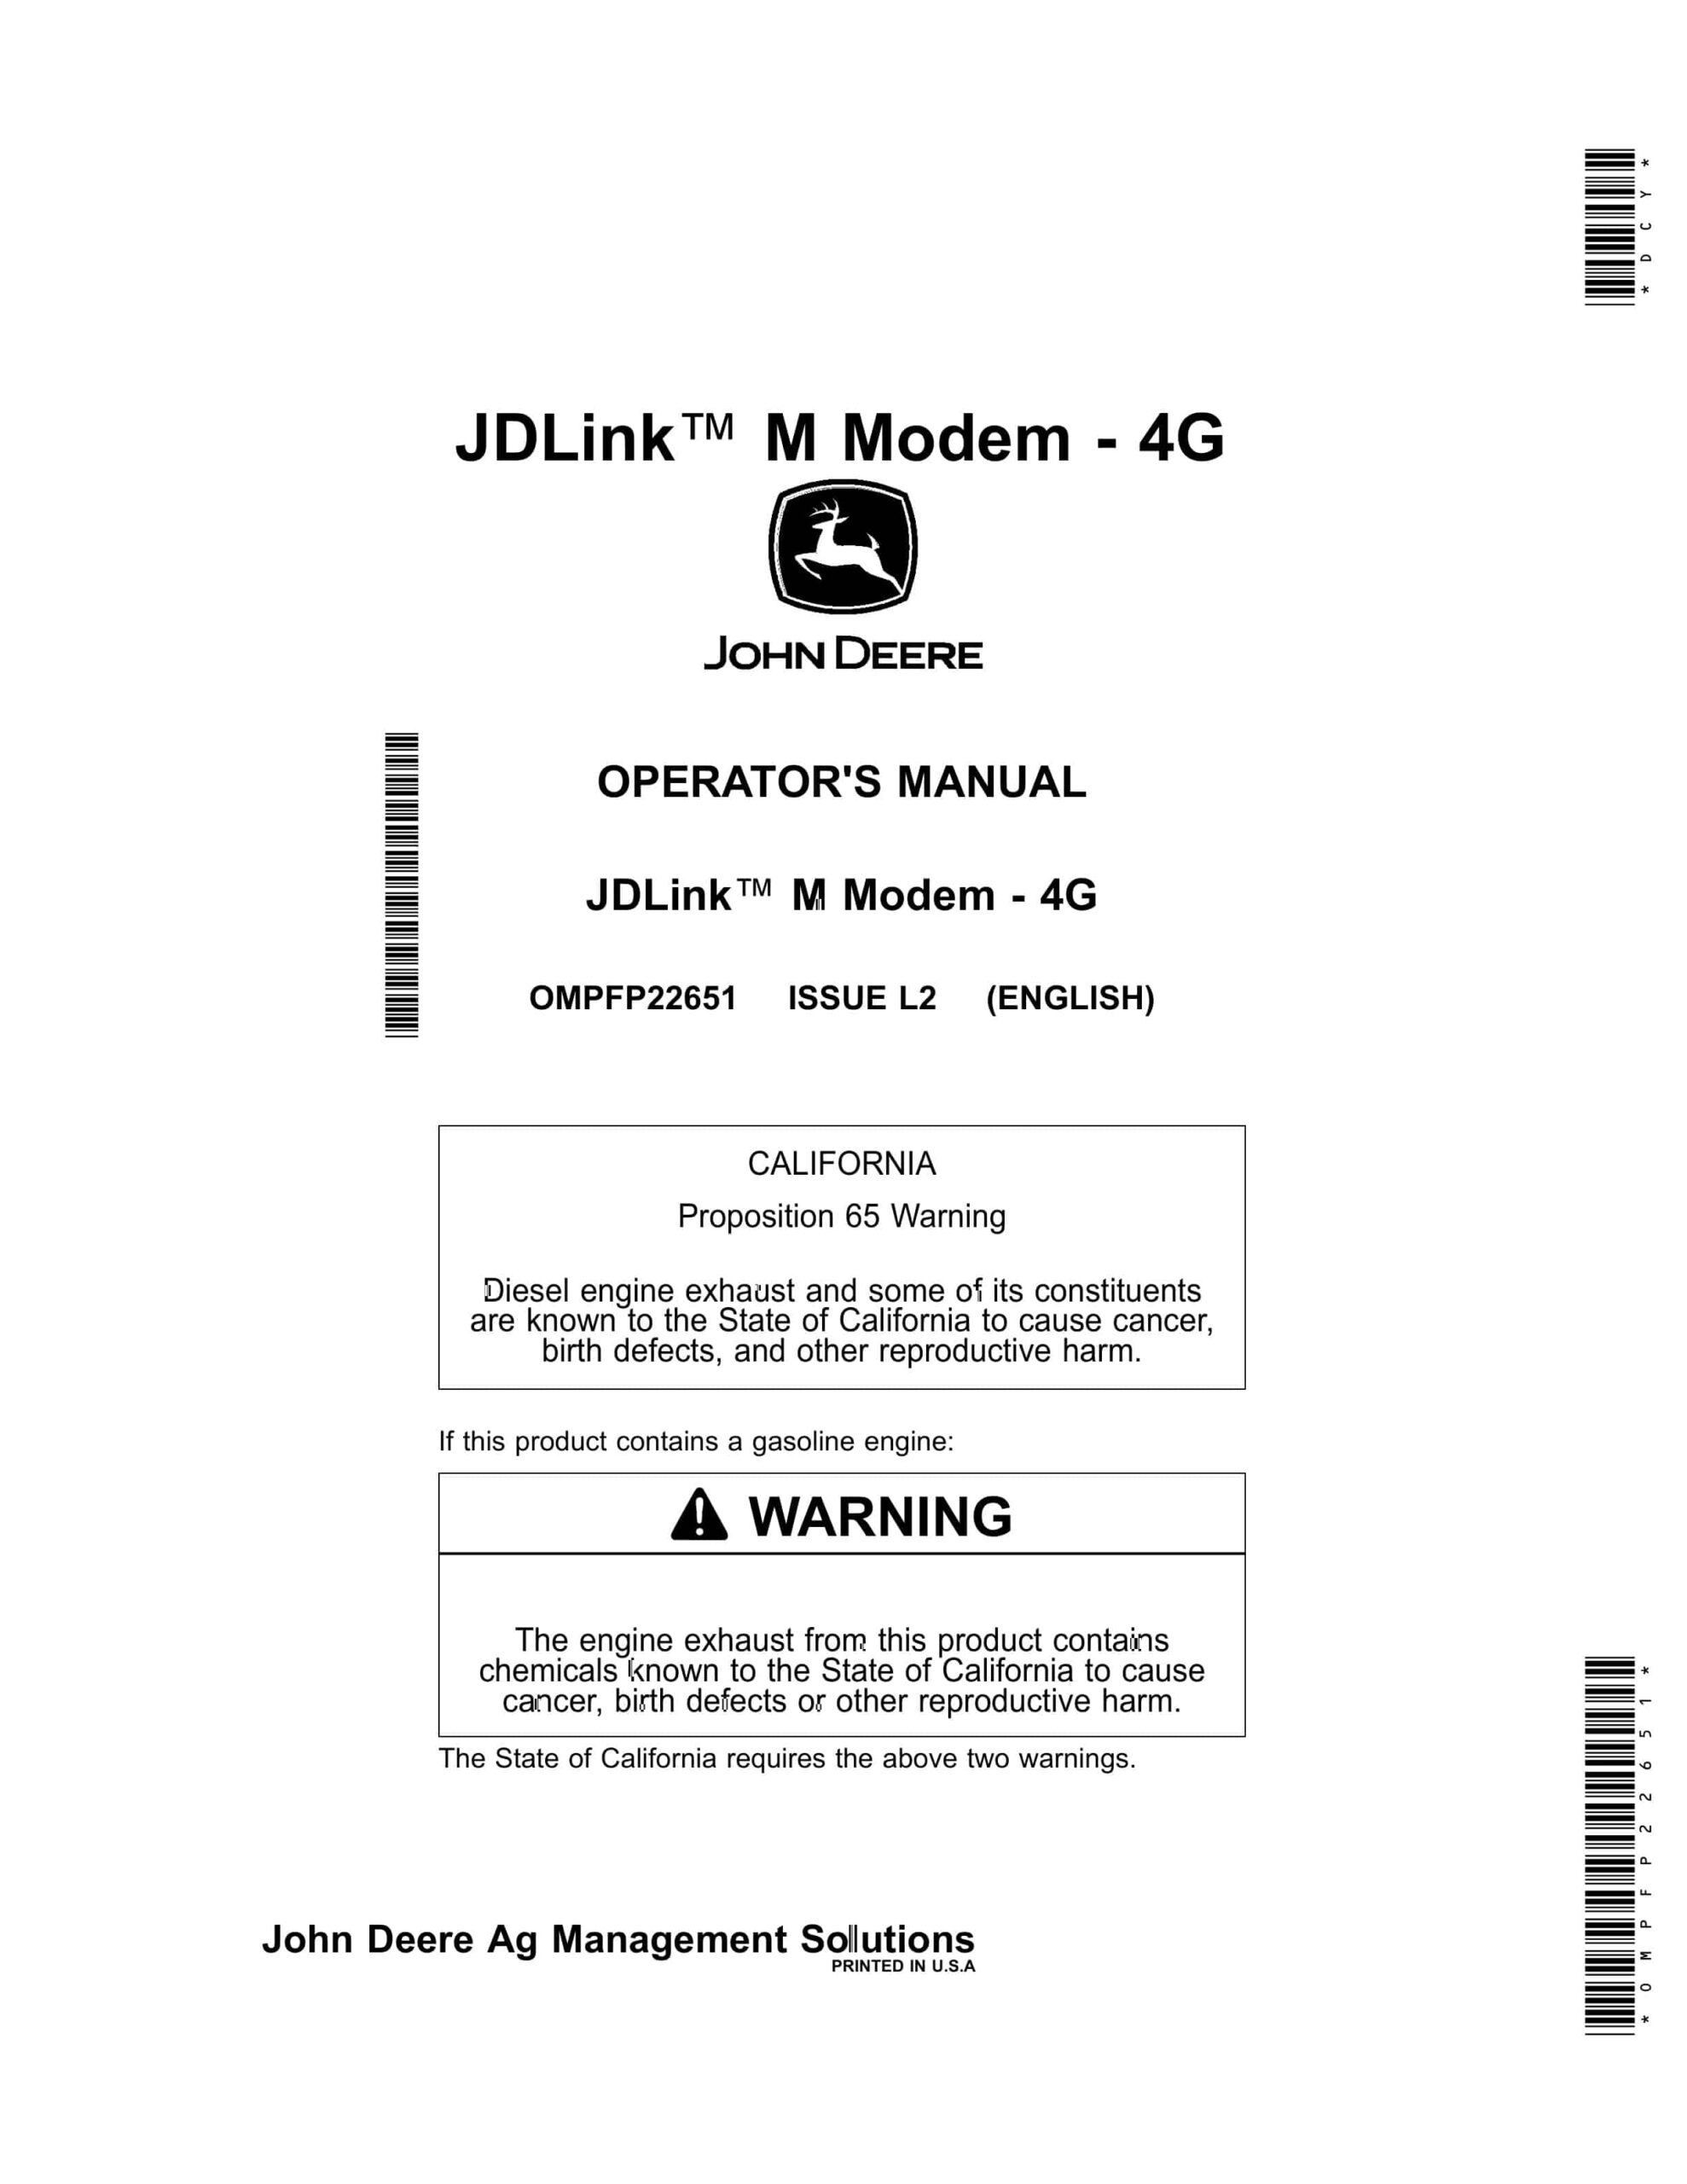 John Deere JDLink M Modem – 4G Operator Manual OMPFP22651-1